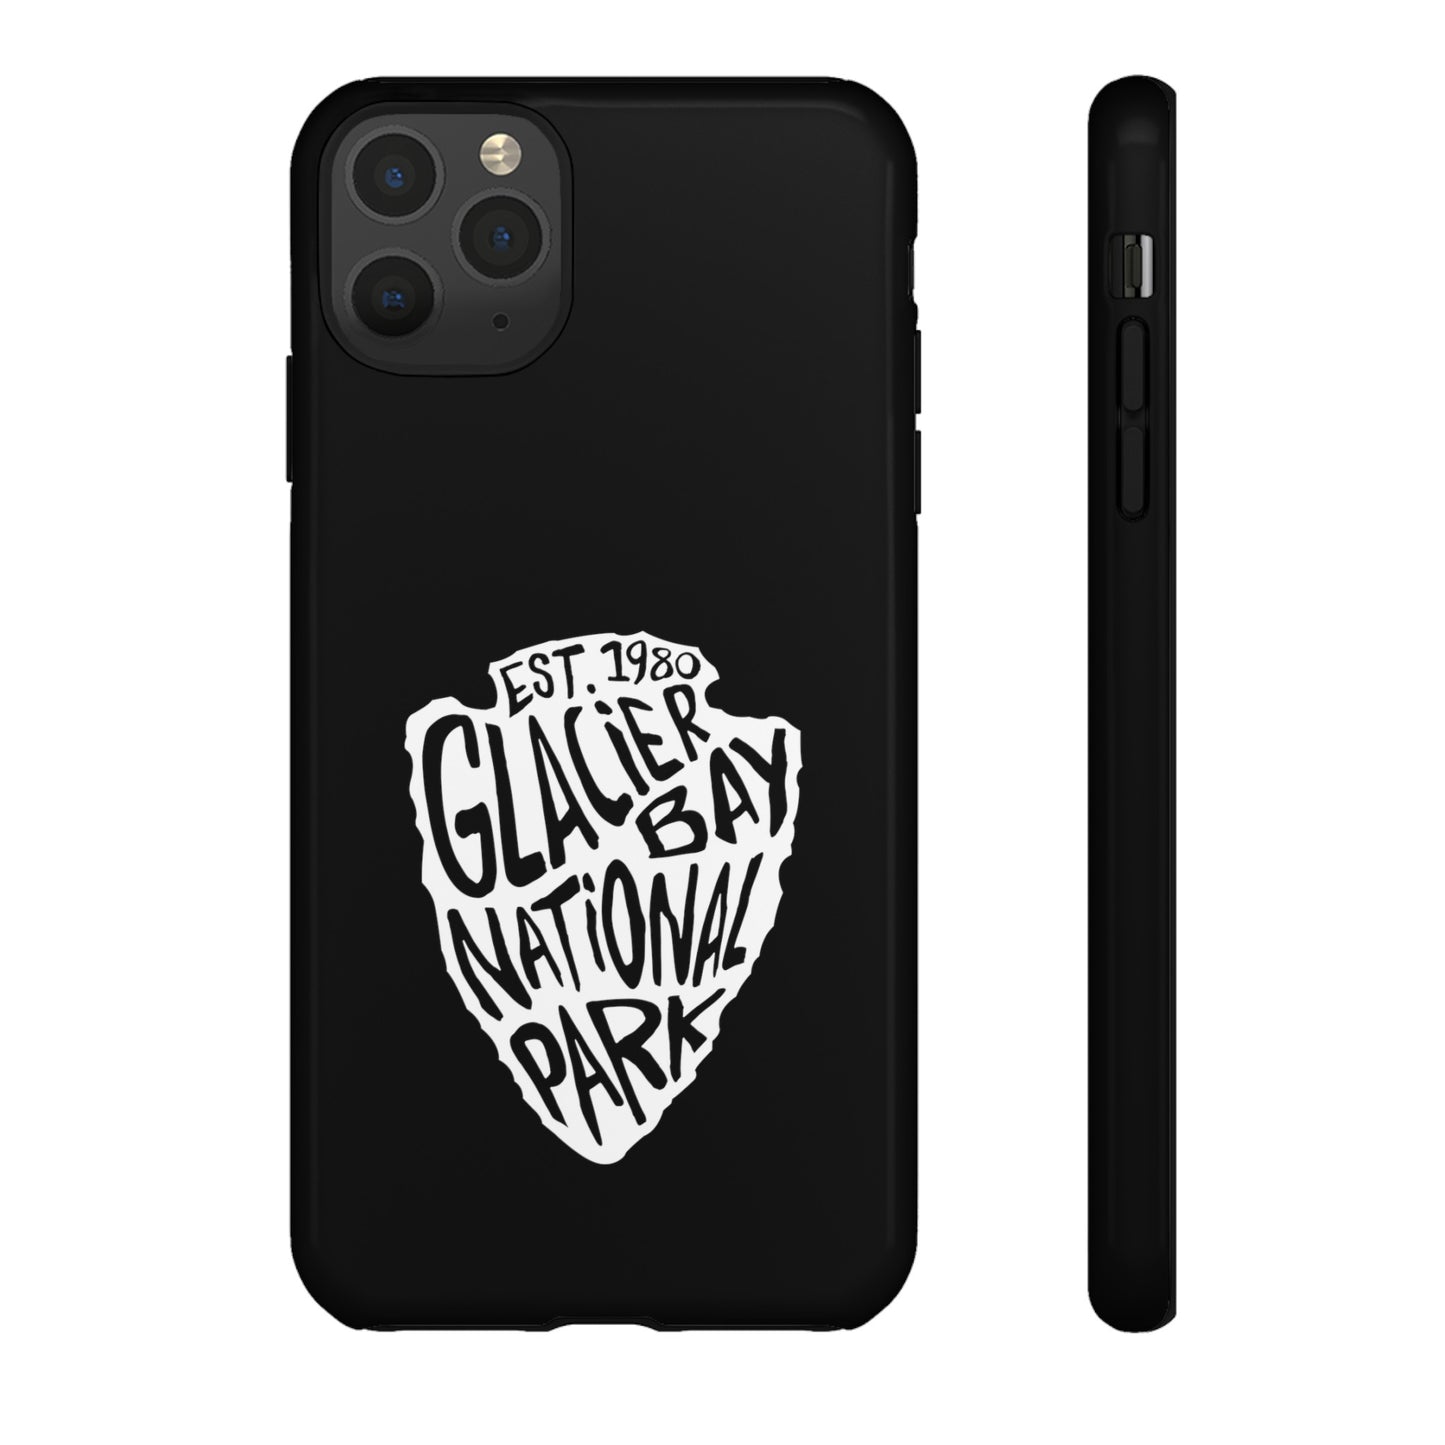 Glacier Bay National Park Phone Case - Arrowhead Design